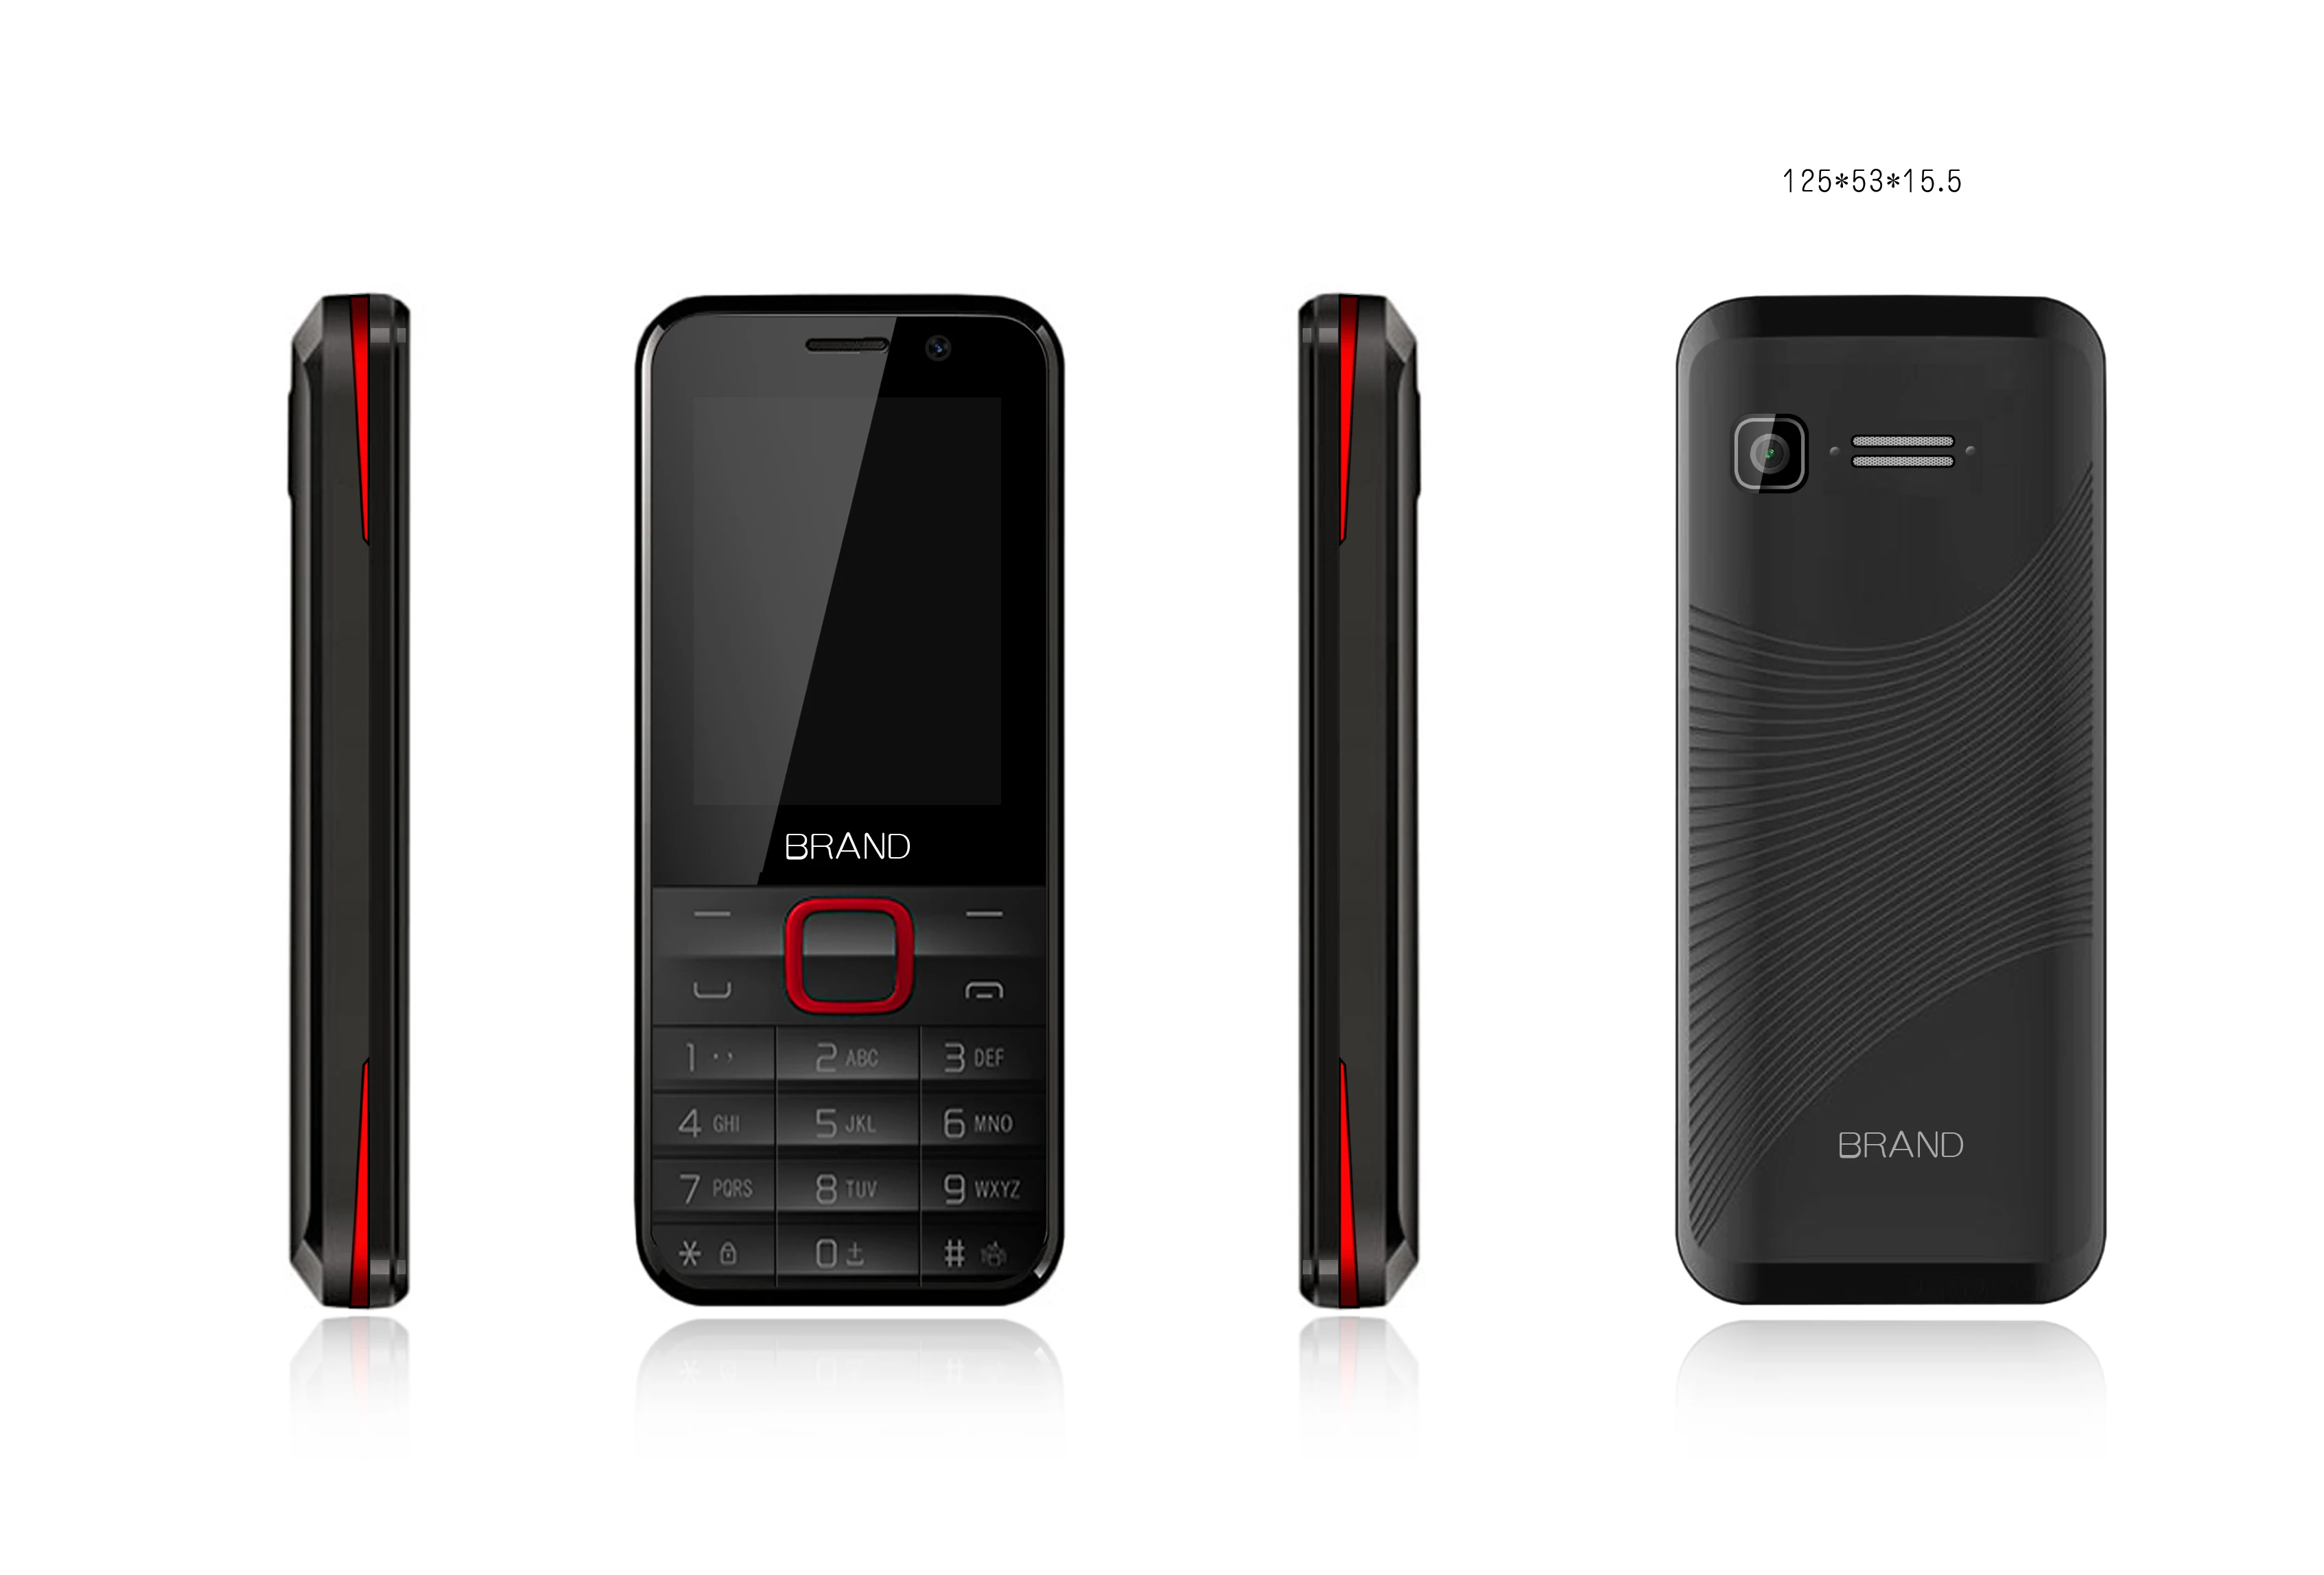 2.4inch 3g Kaios Functie Qwerty Toetsenbord 3g Mobiele Telefoon - Functie Telefoon,Qwerty Toetsenbord 3g Mobiele Telefoon,Kaios Telefoon Product on Alibaba.com